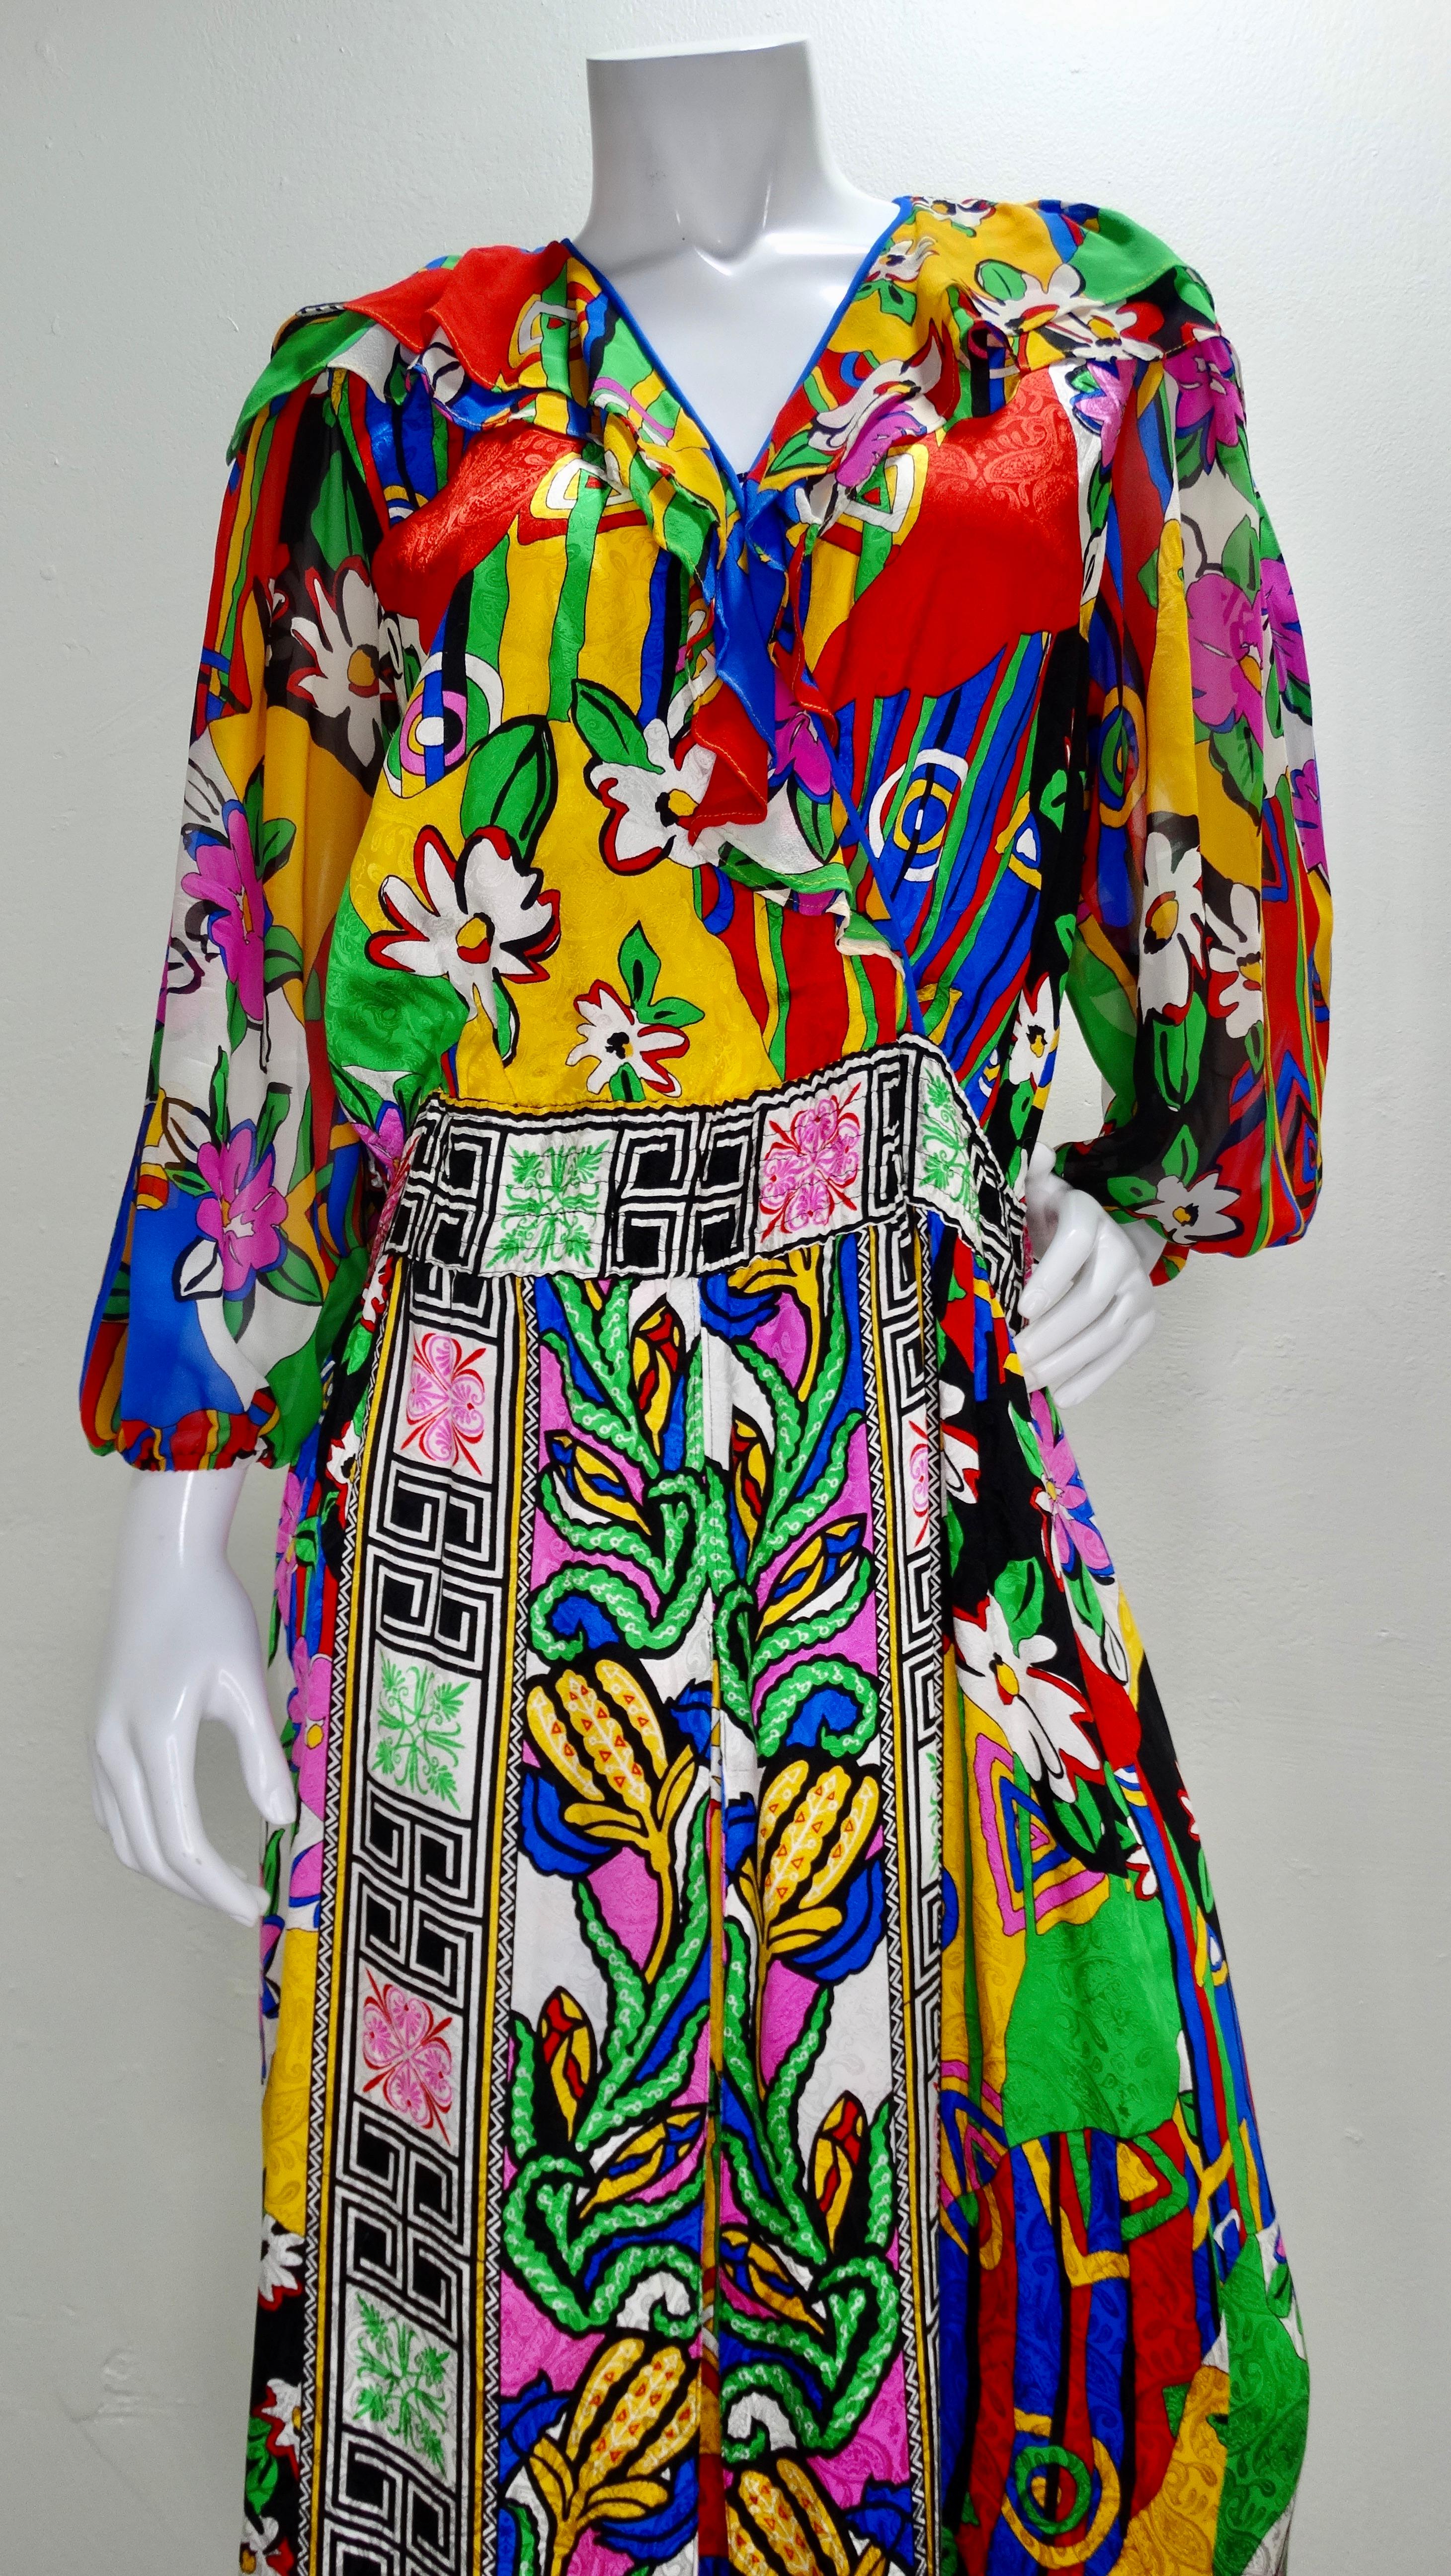 Women's Diane Freis 1980s Floral Printed Dress